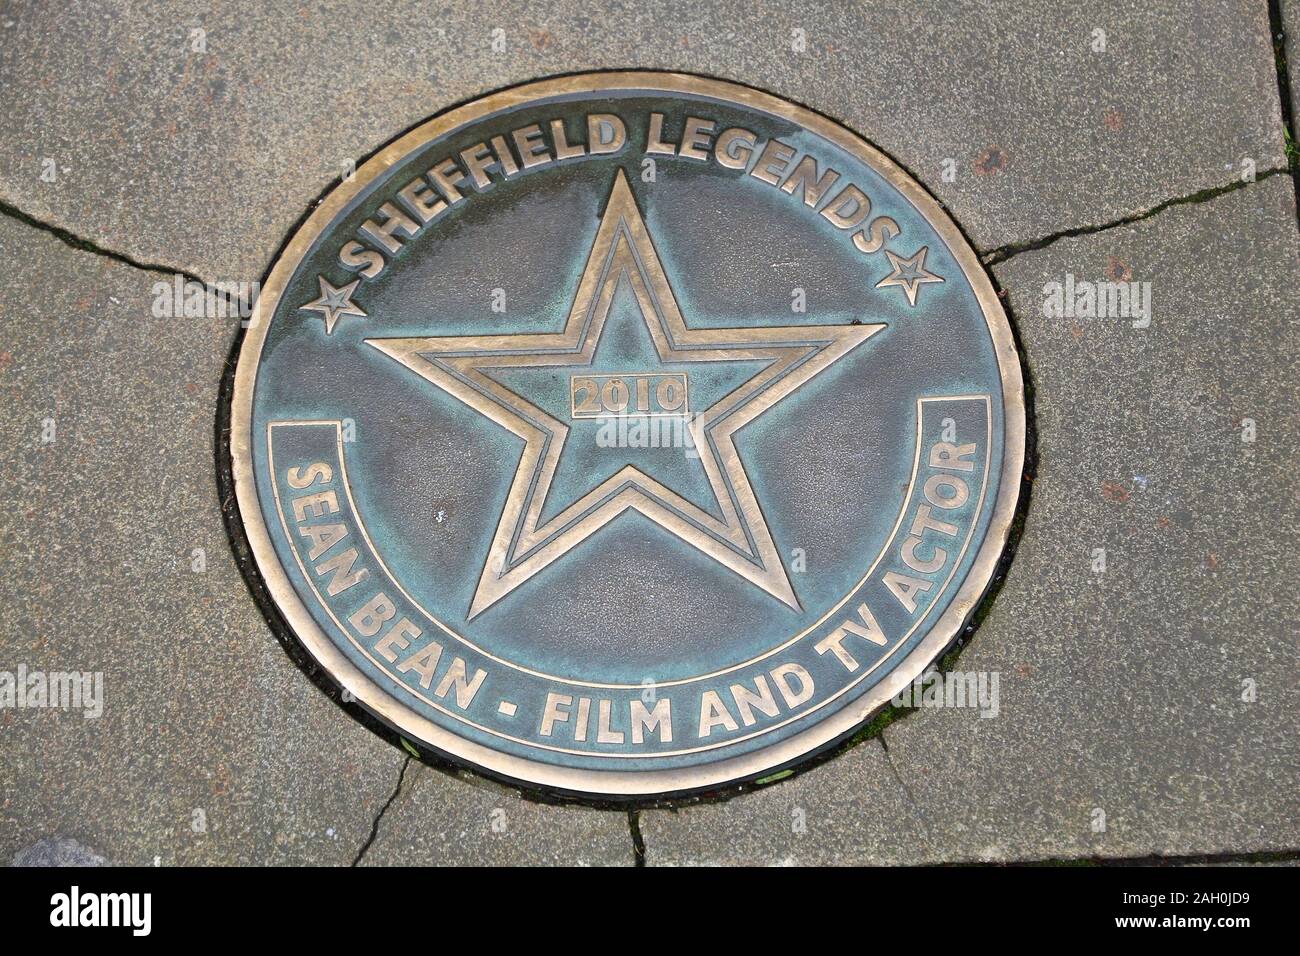 SHEFFIELD, UK - JULY 10, 2016: Sheffield Legends sidewalk star in Yorkshire, UK. Sean Bean is an actor born in Handsworth suburb of Sheffield. Stock Photo